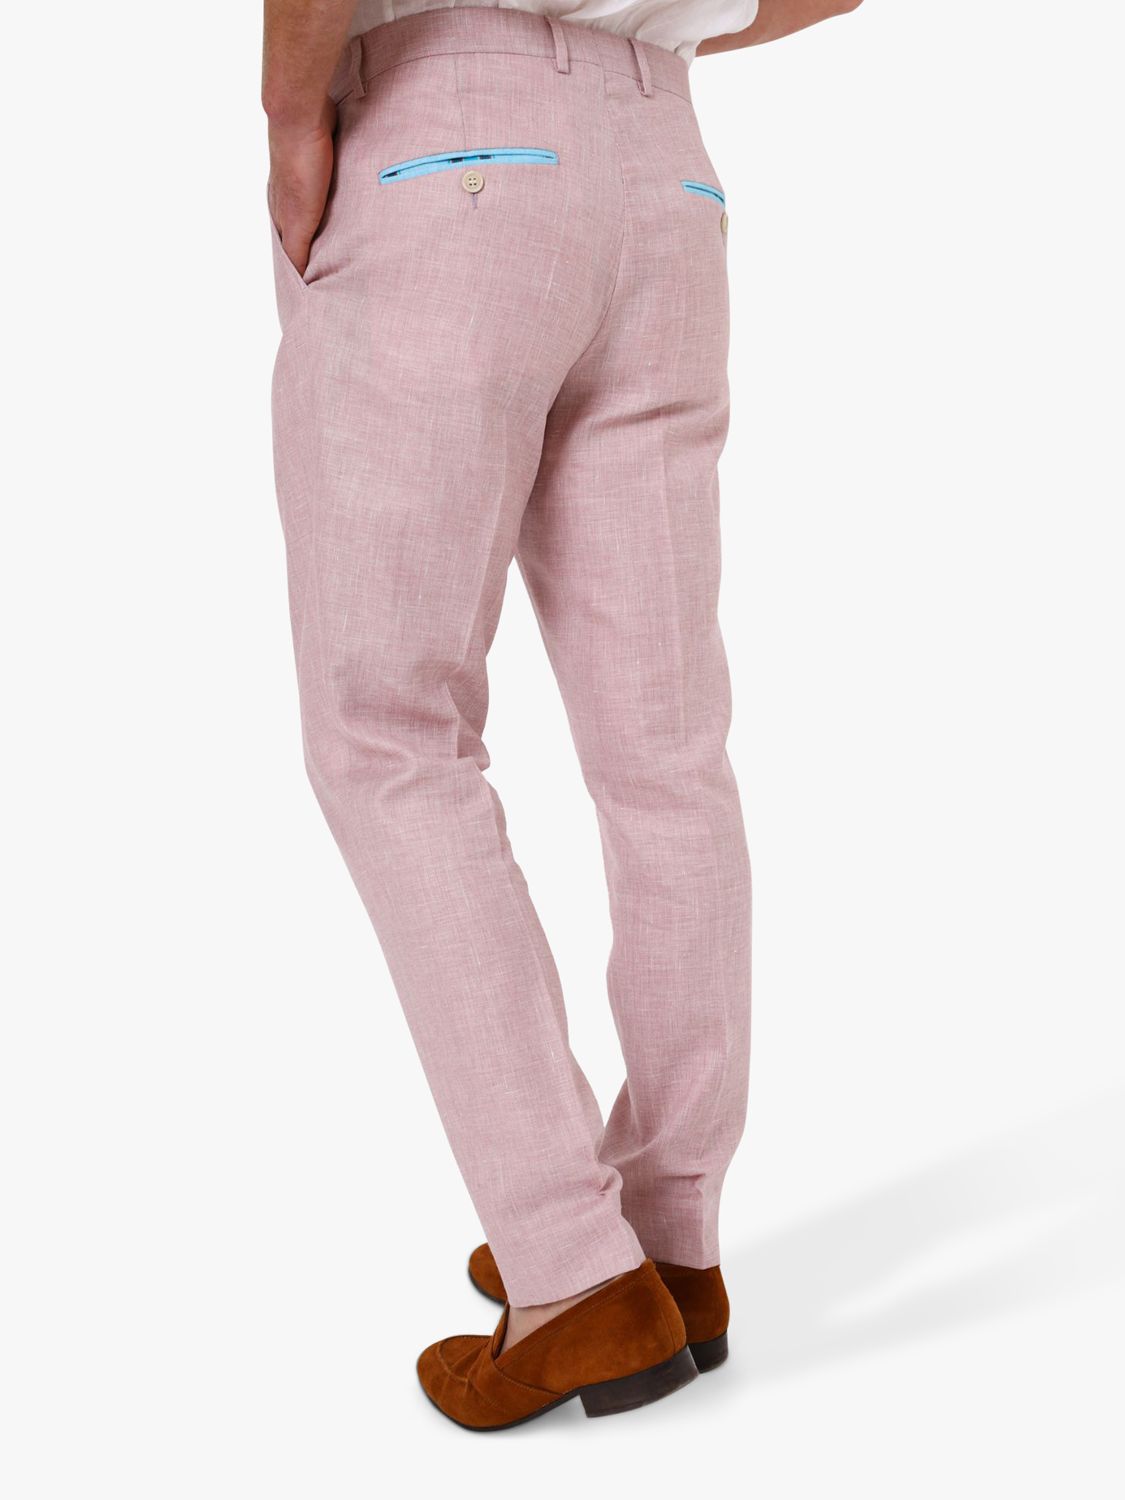 KOY Linen Blend Suit Trousers, Light Pink, 38R